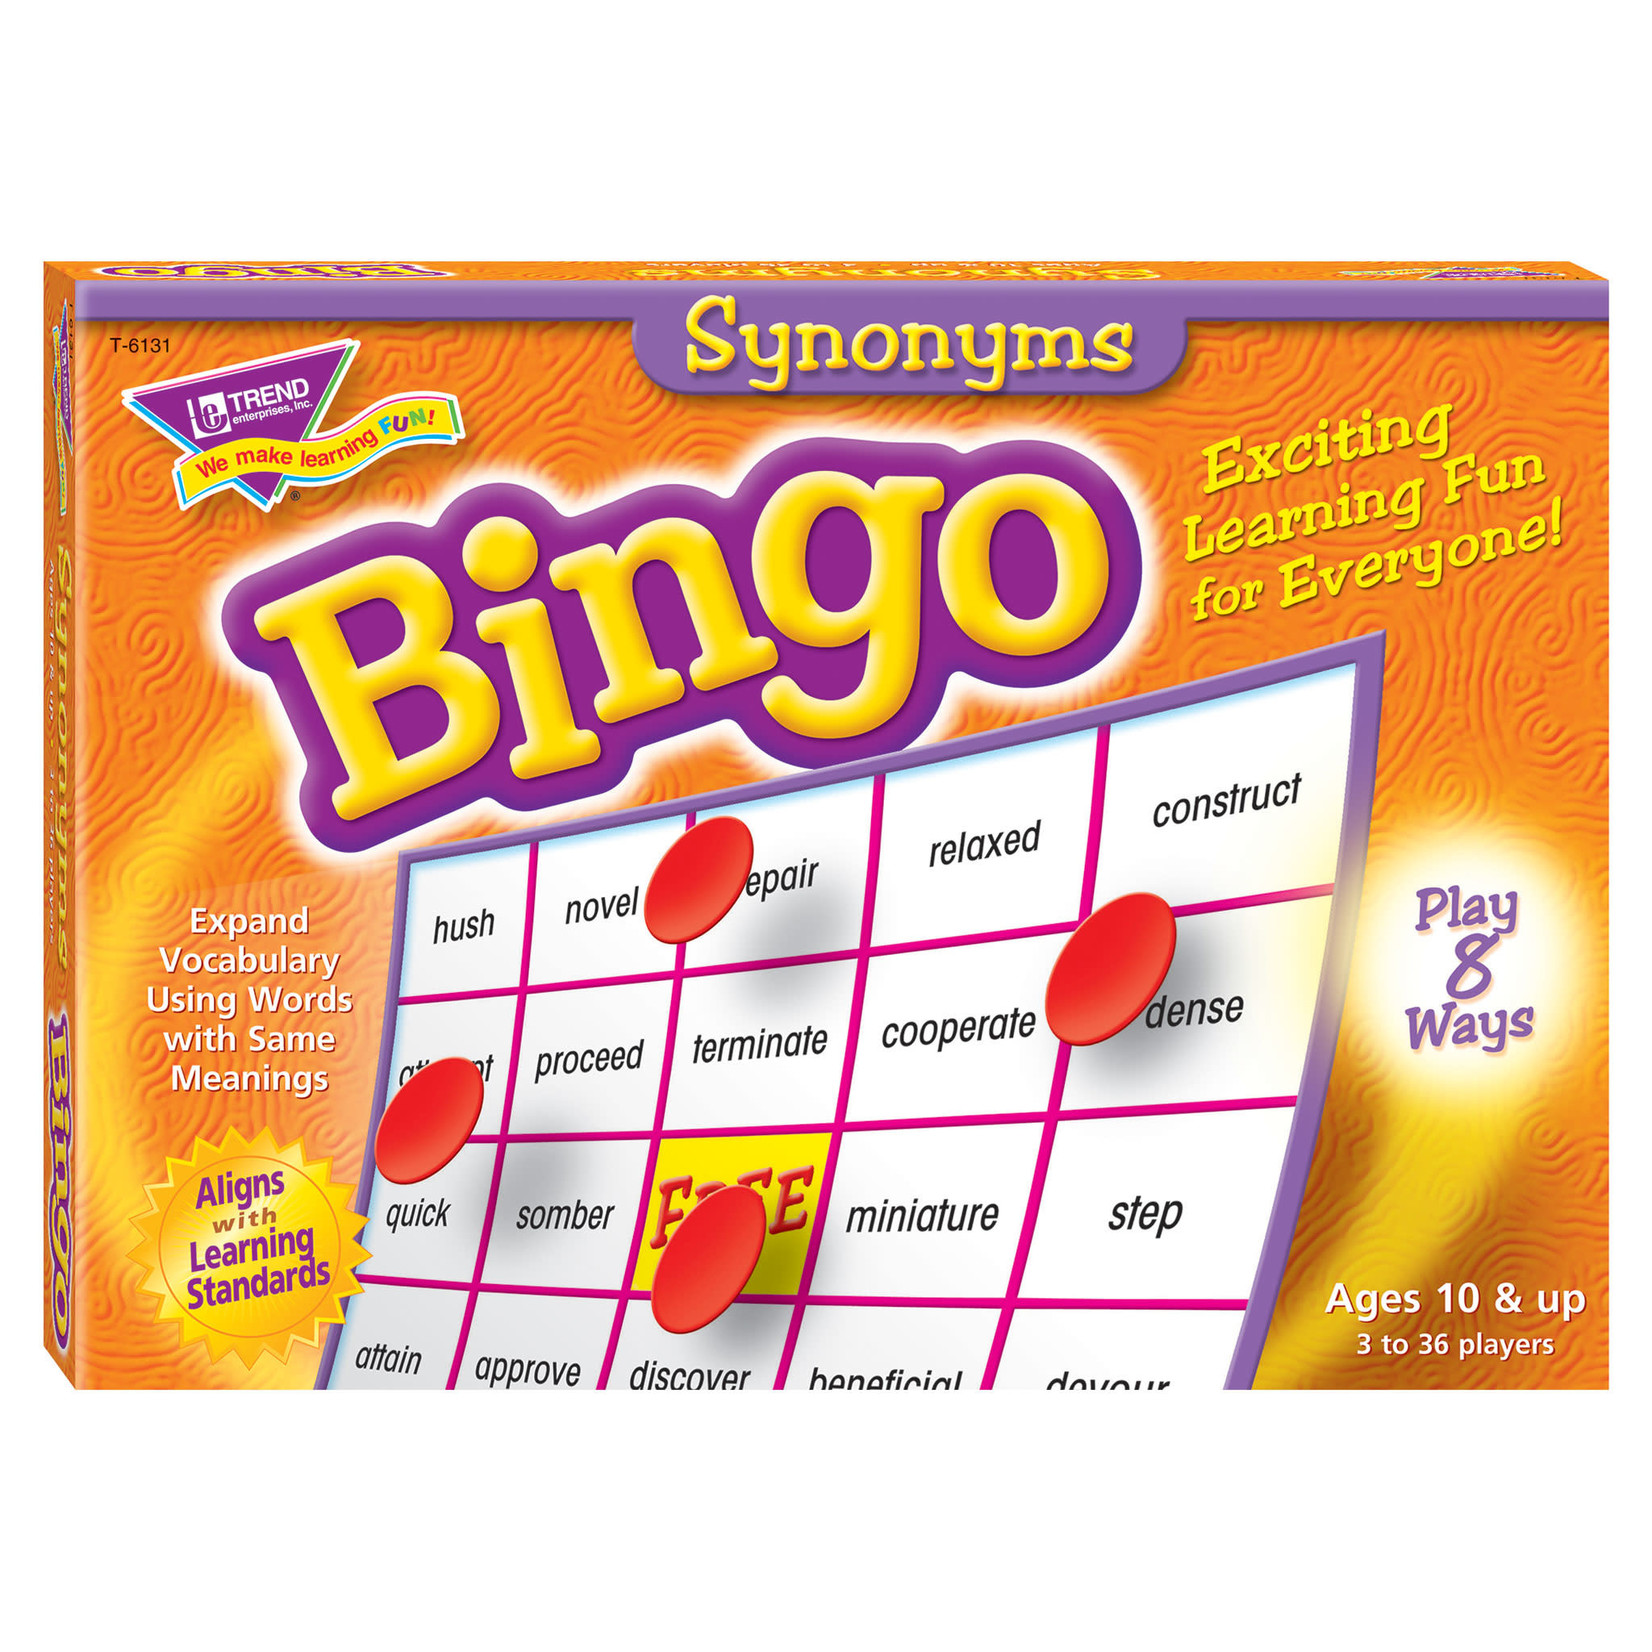 TREND Synonymns Bingo